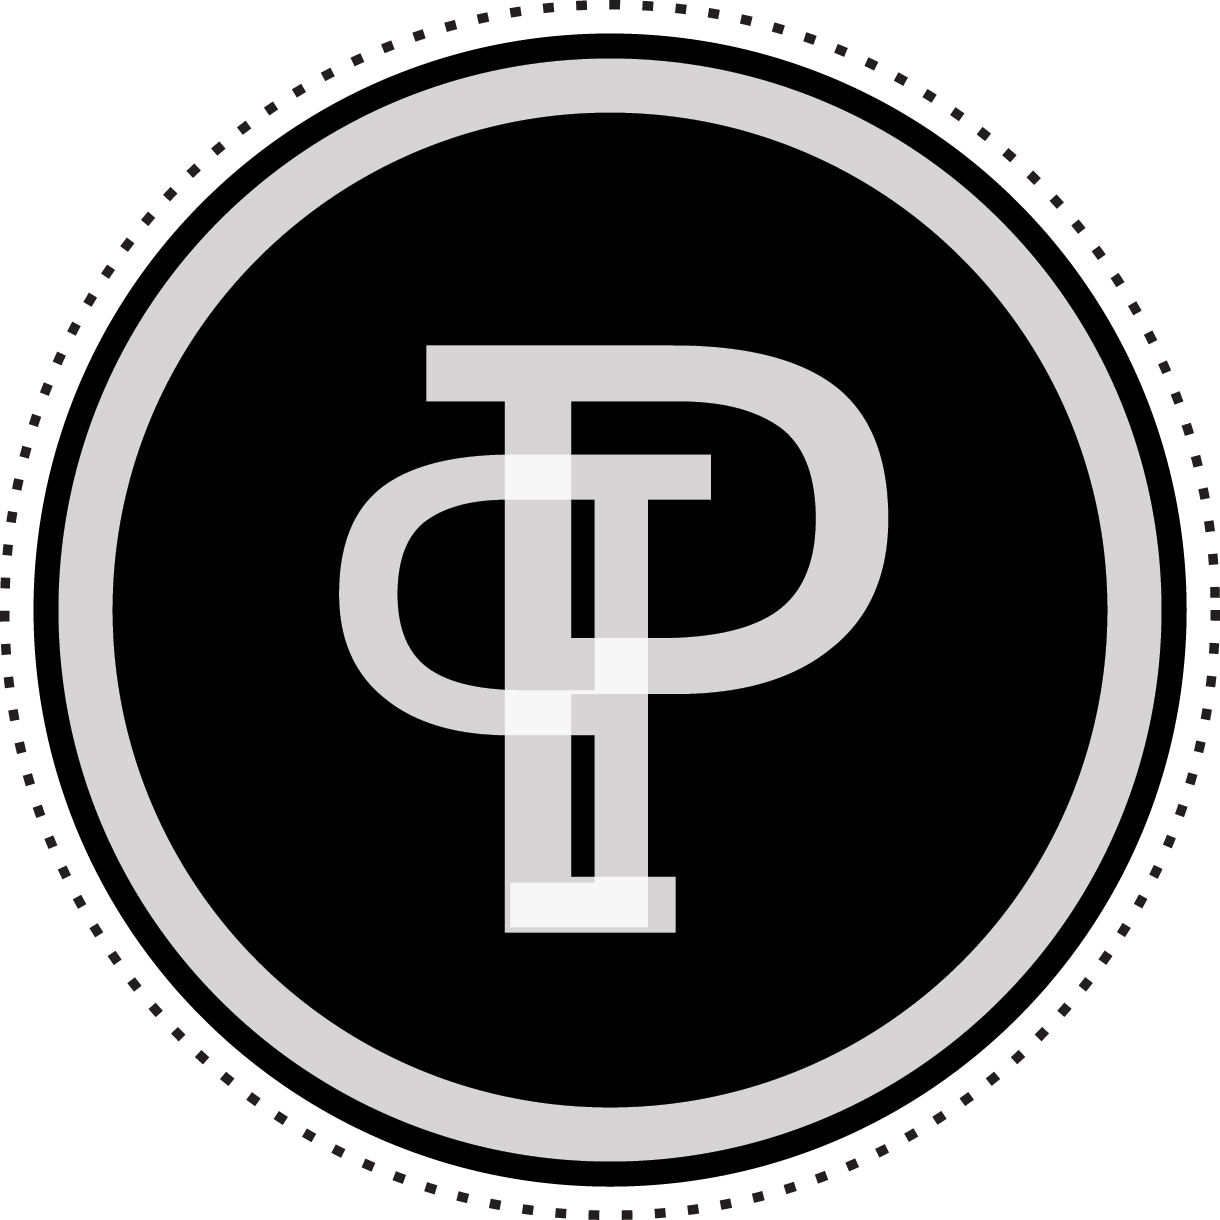 TPPI Logo – The Palette Project